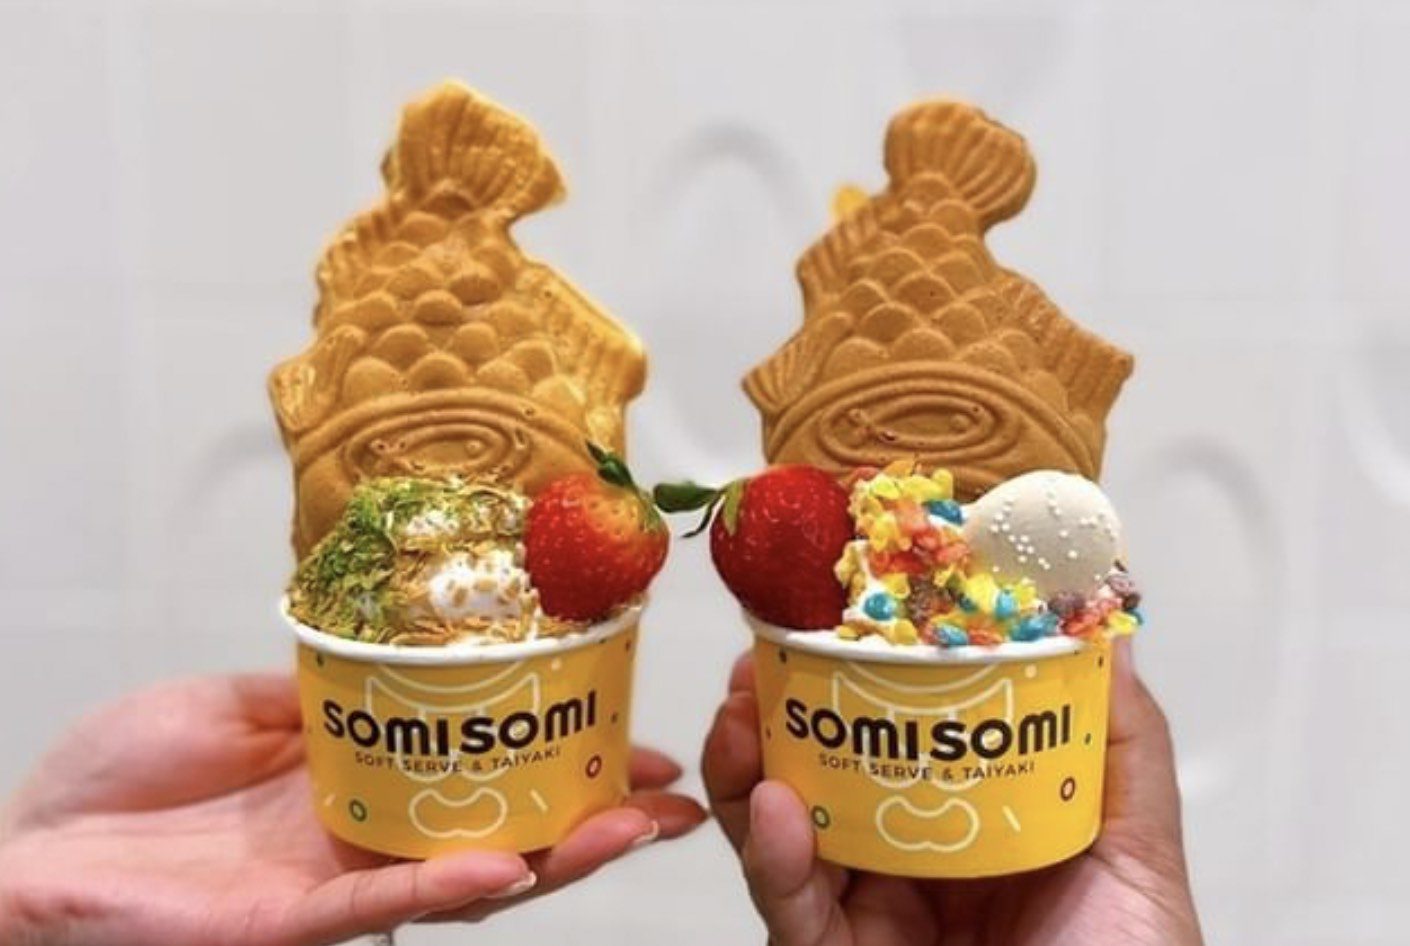 SomiSomi Soft Serve & Taiyaki